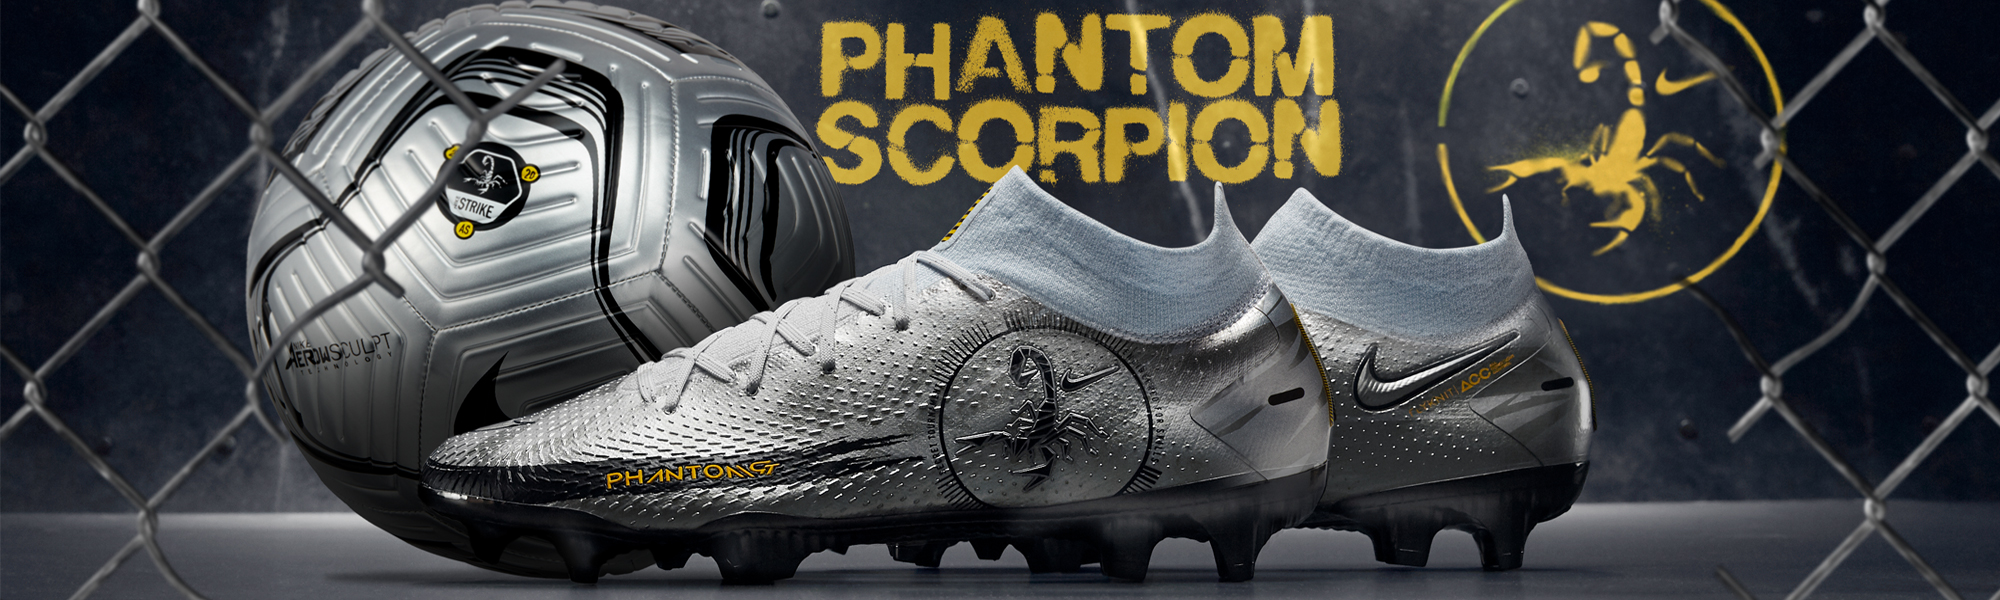 nike football shoes phantom